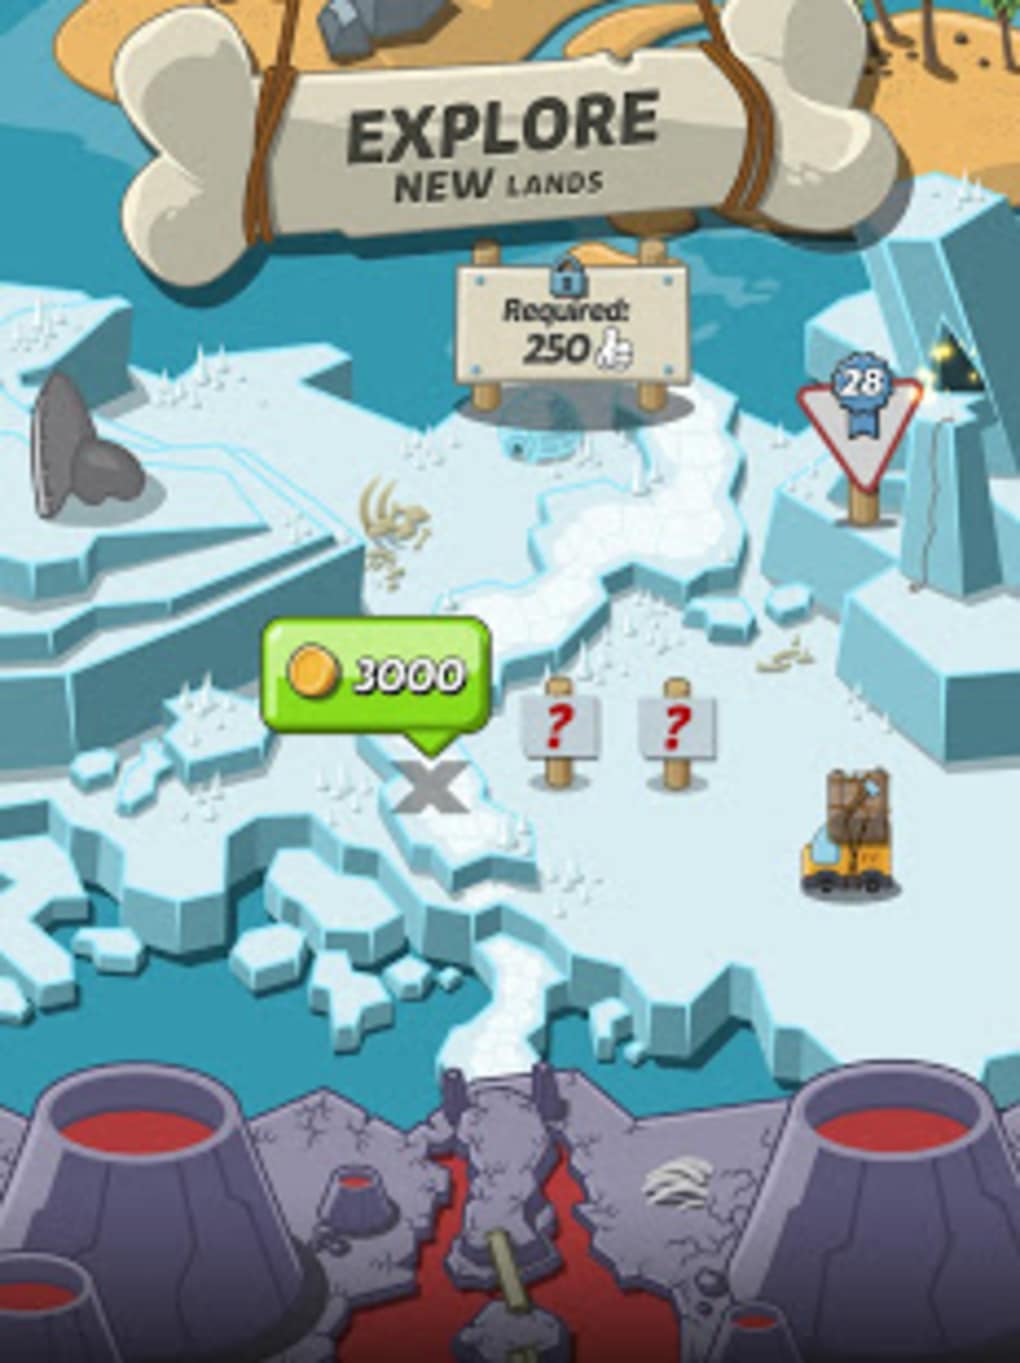 Crazy Dino Park - Apps on Google Play